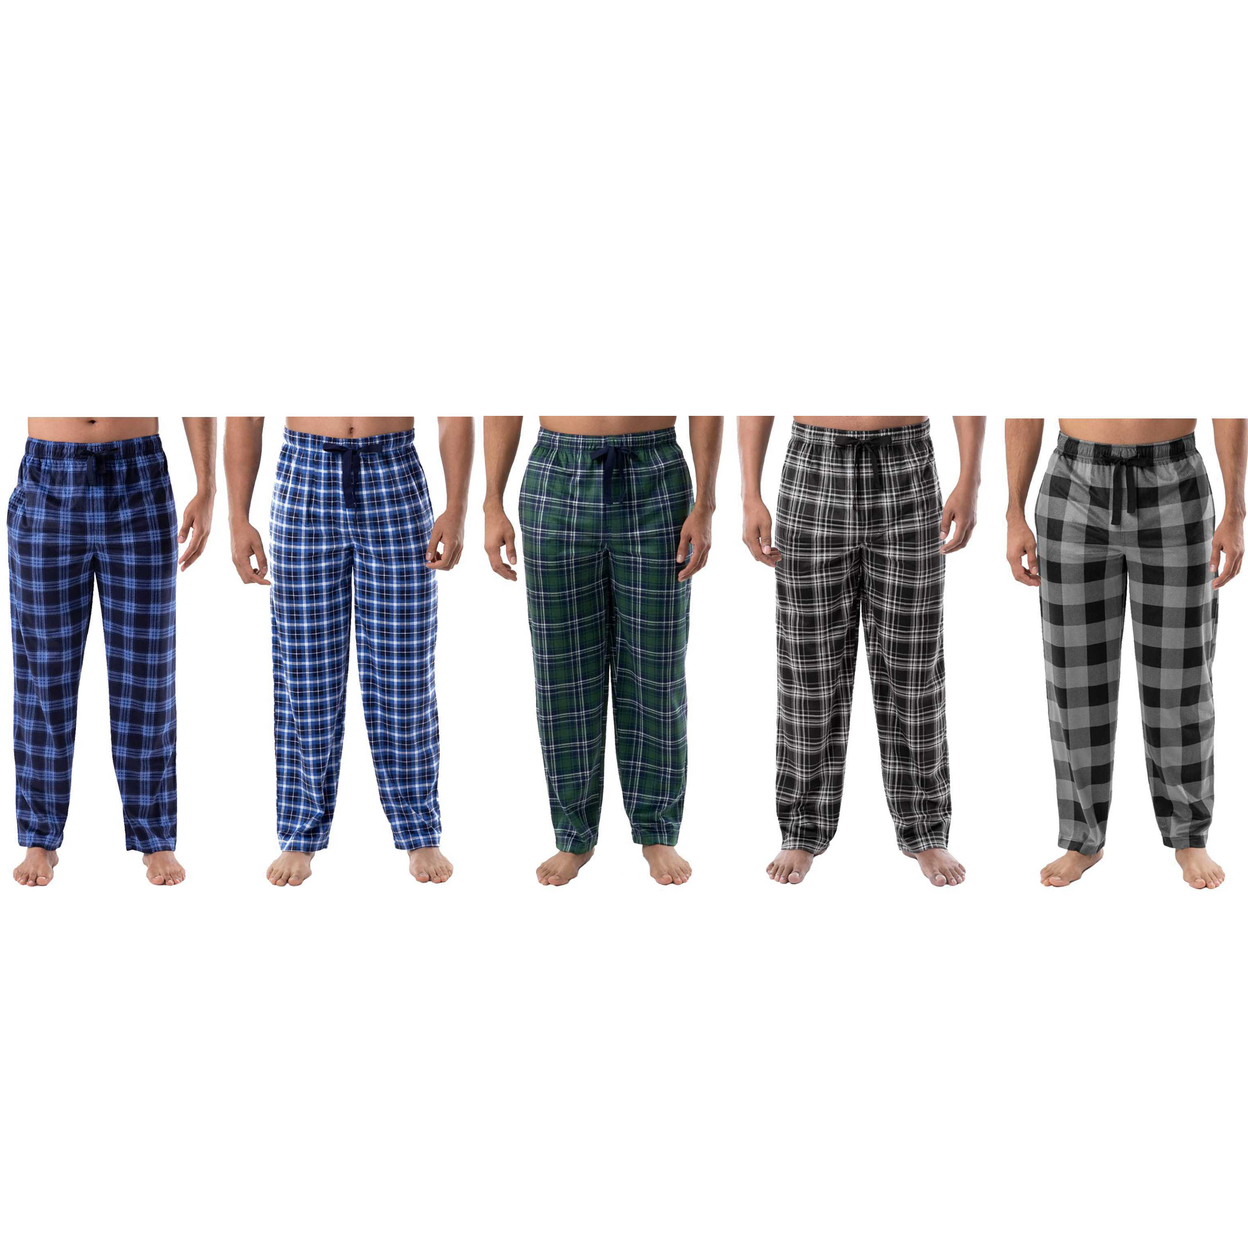 5-Pack: Men's Ultra-Soft Cozy Lounge Sleep Micro Fleece Plaid Pajama Pants - Small